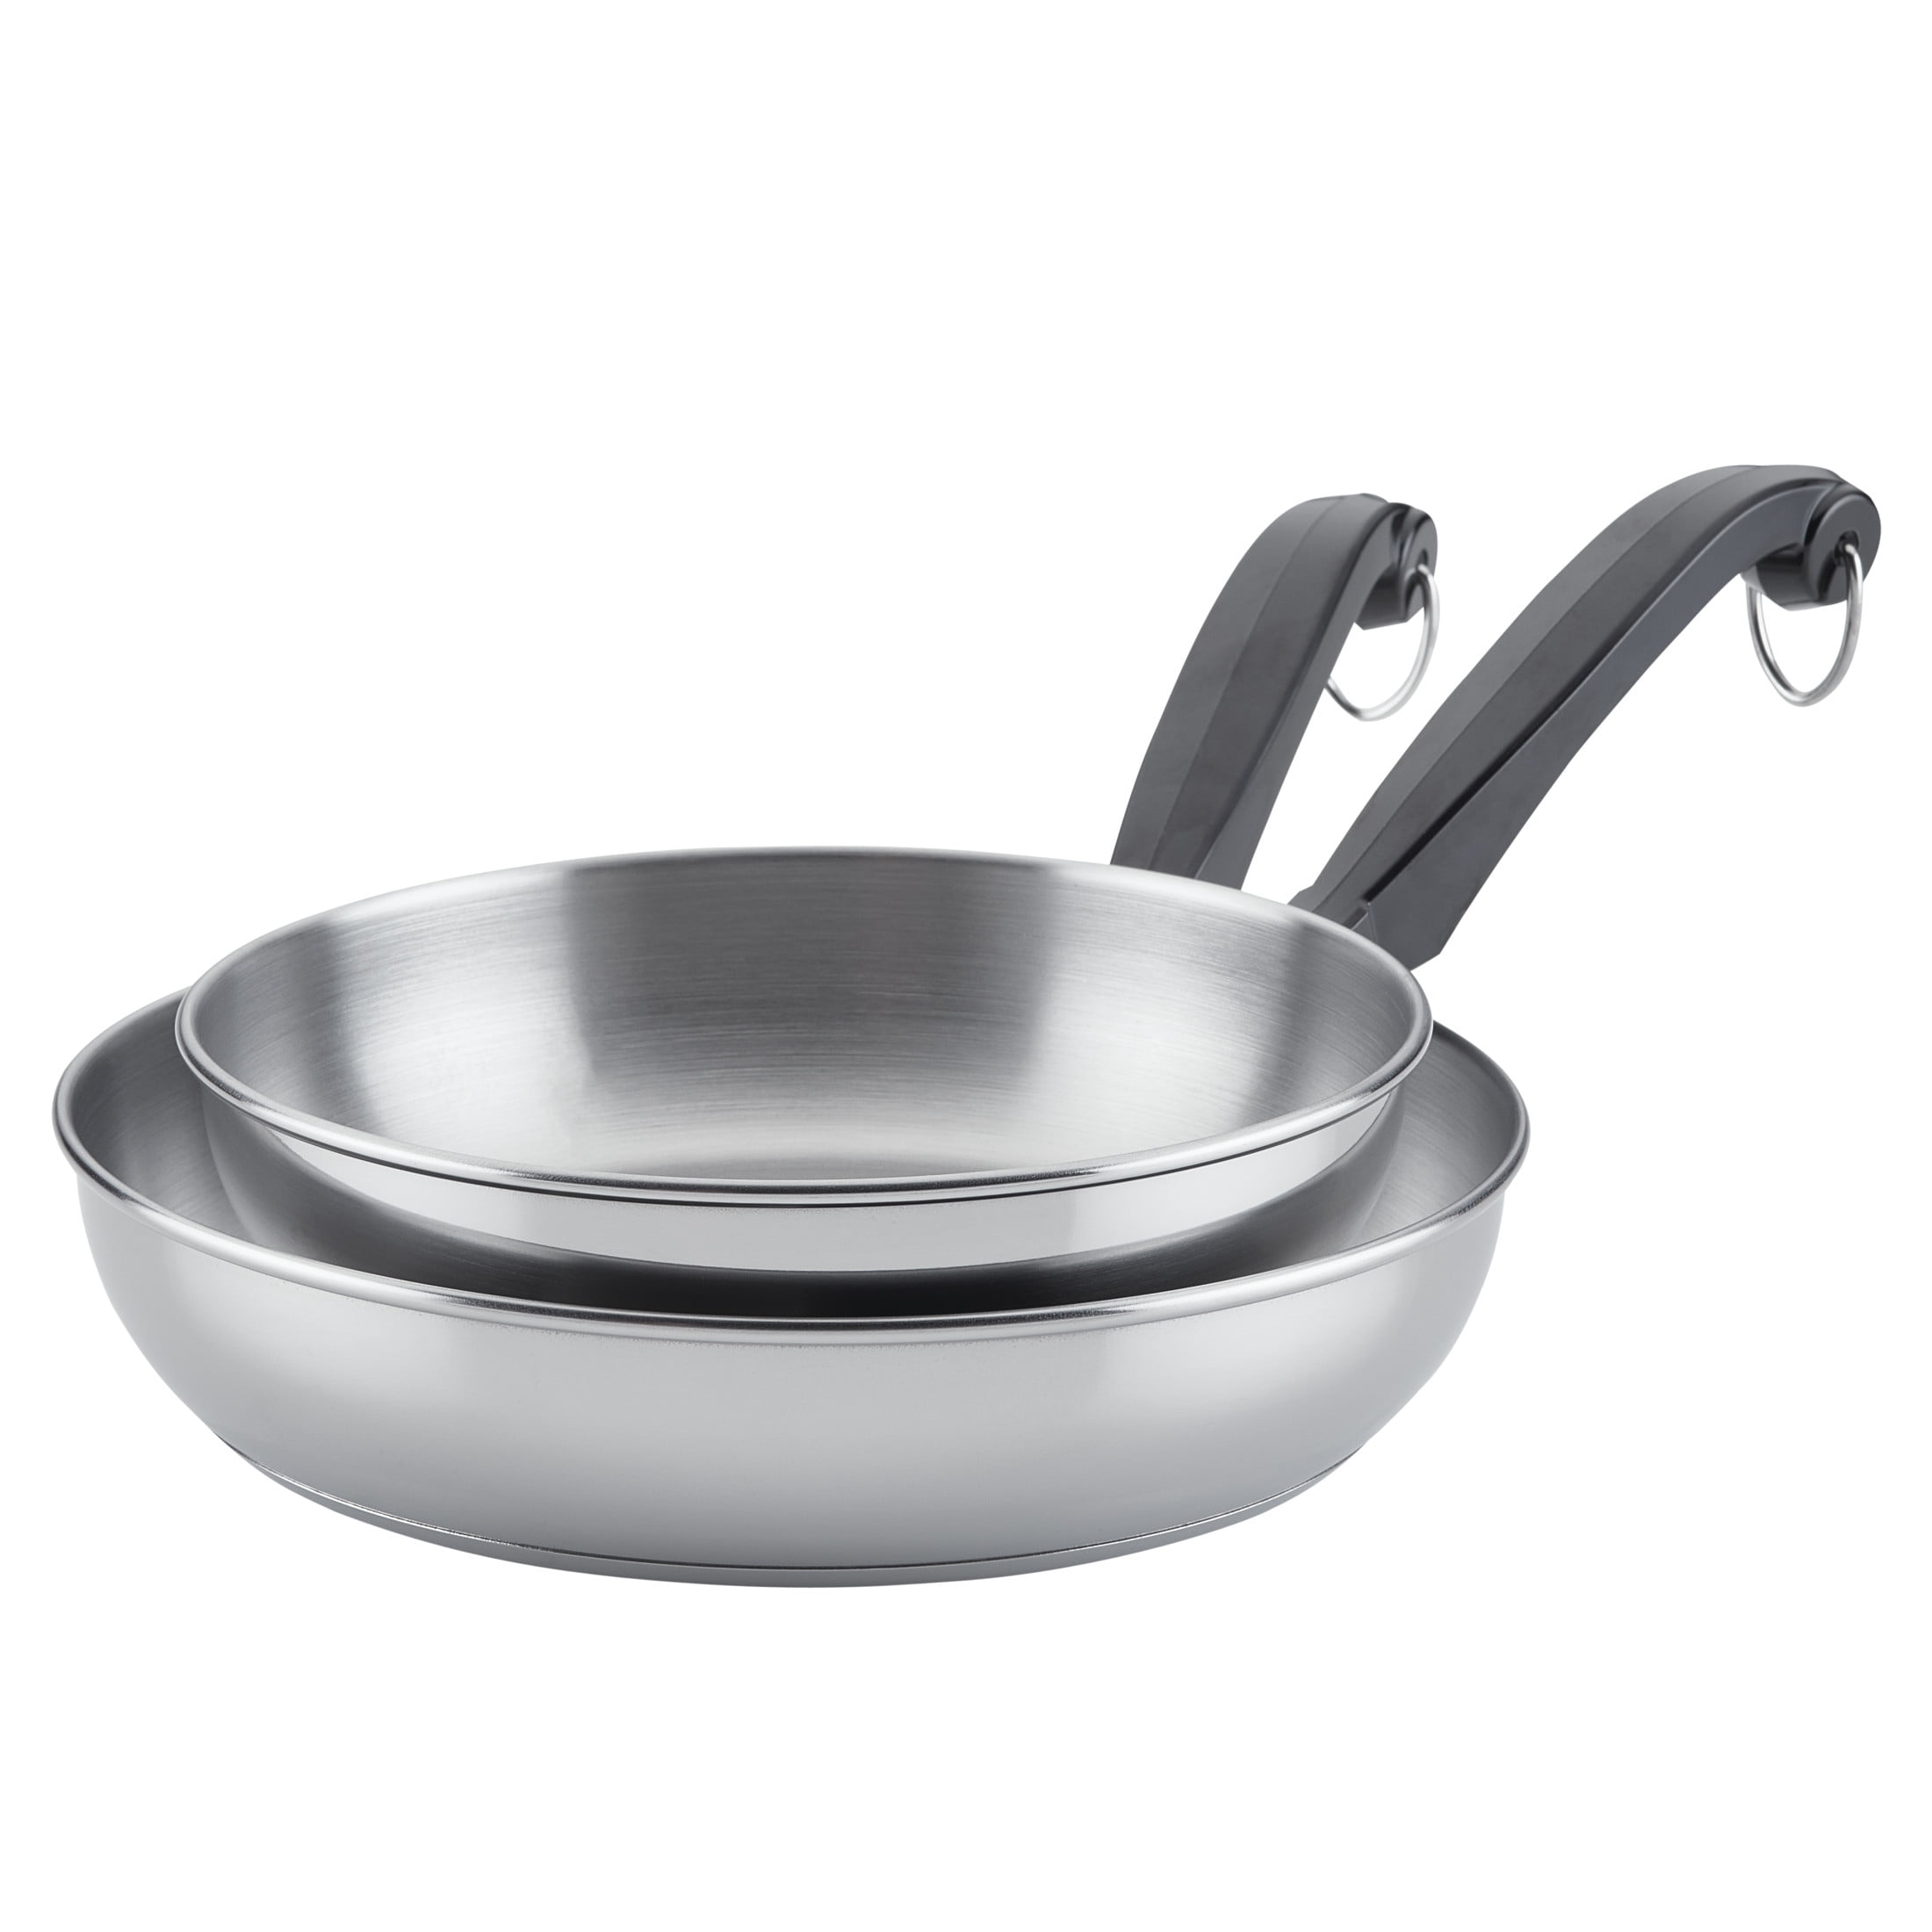 10 Stainless Steel Frying Pan